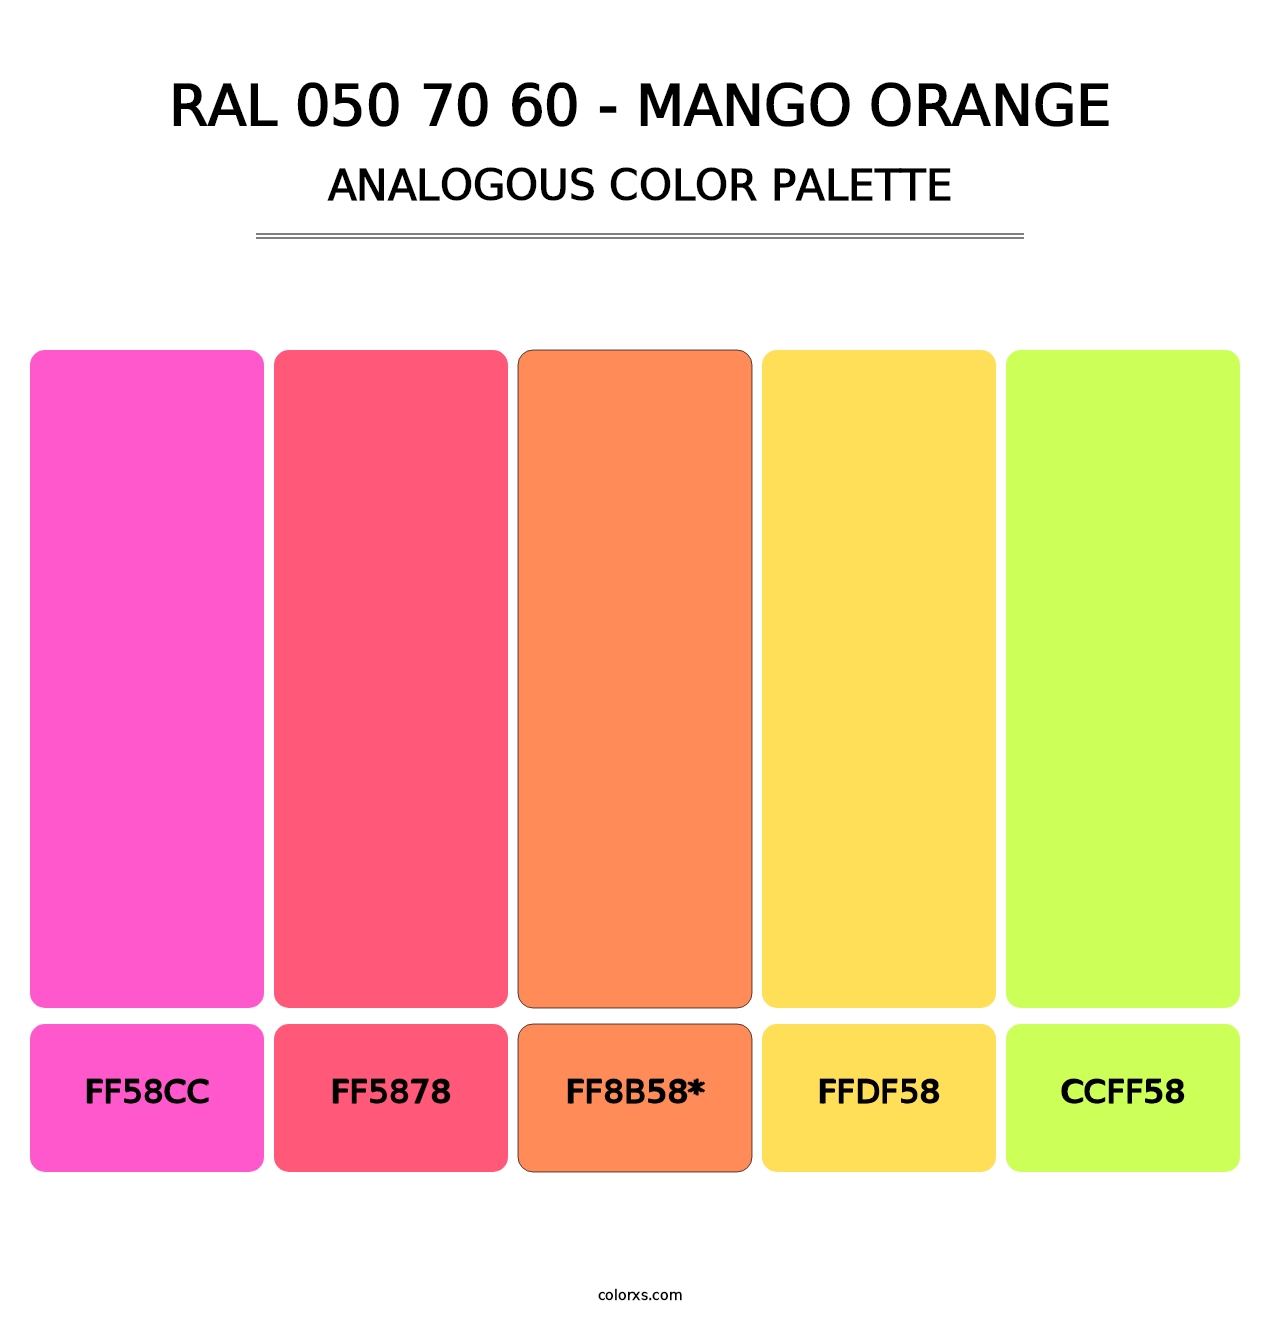 RAL 050 70 60 - Mango Orange - Analogous Color Palette